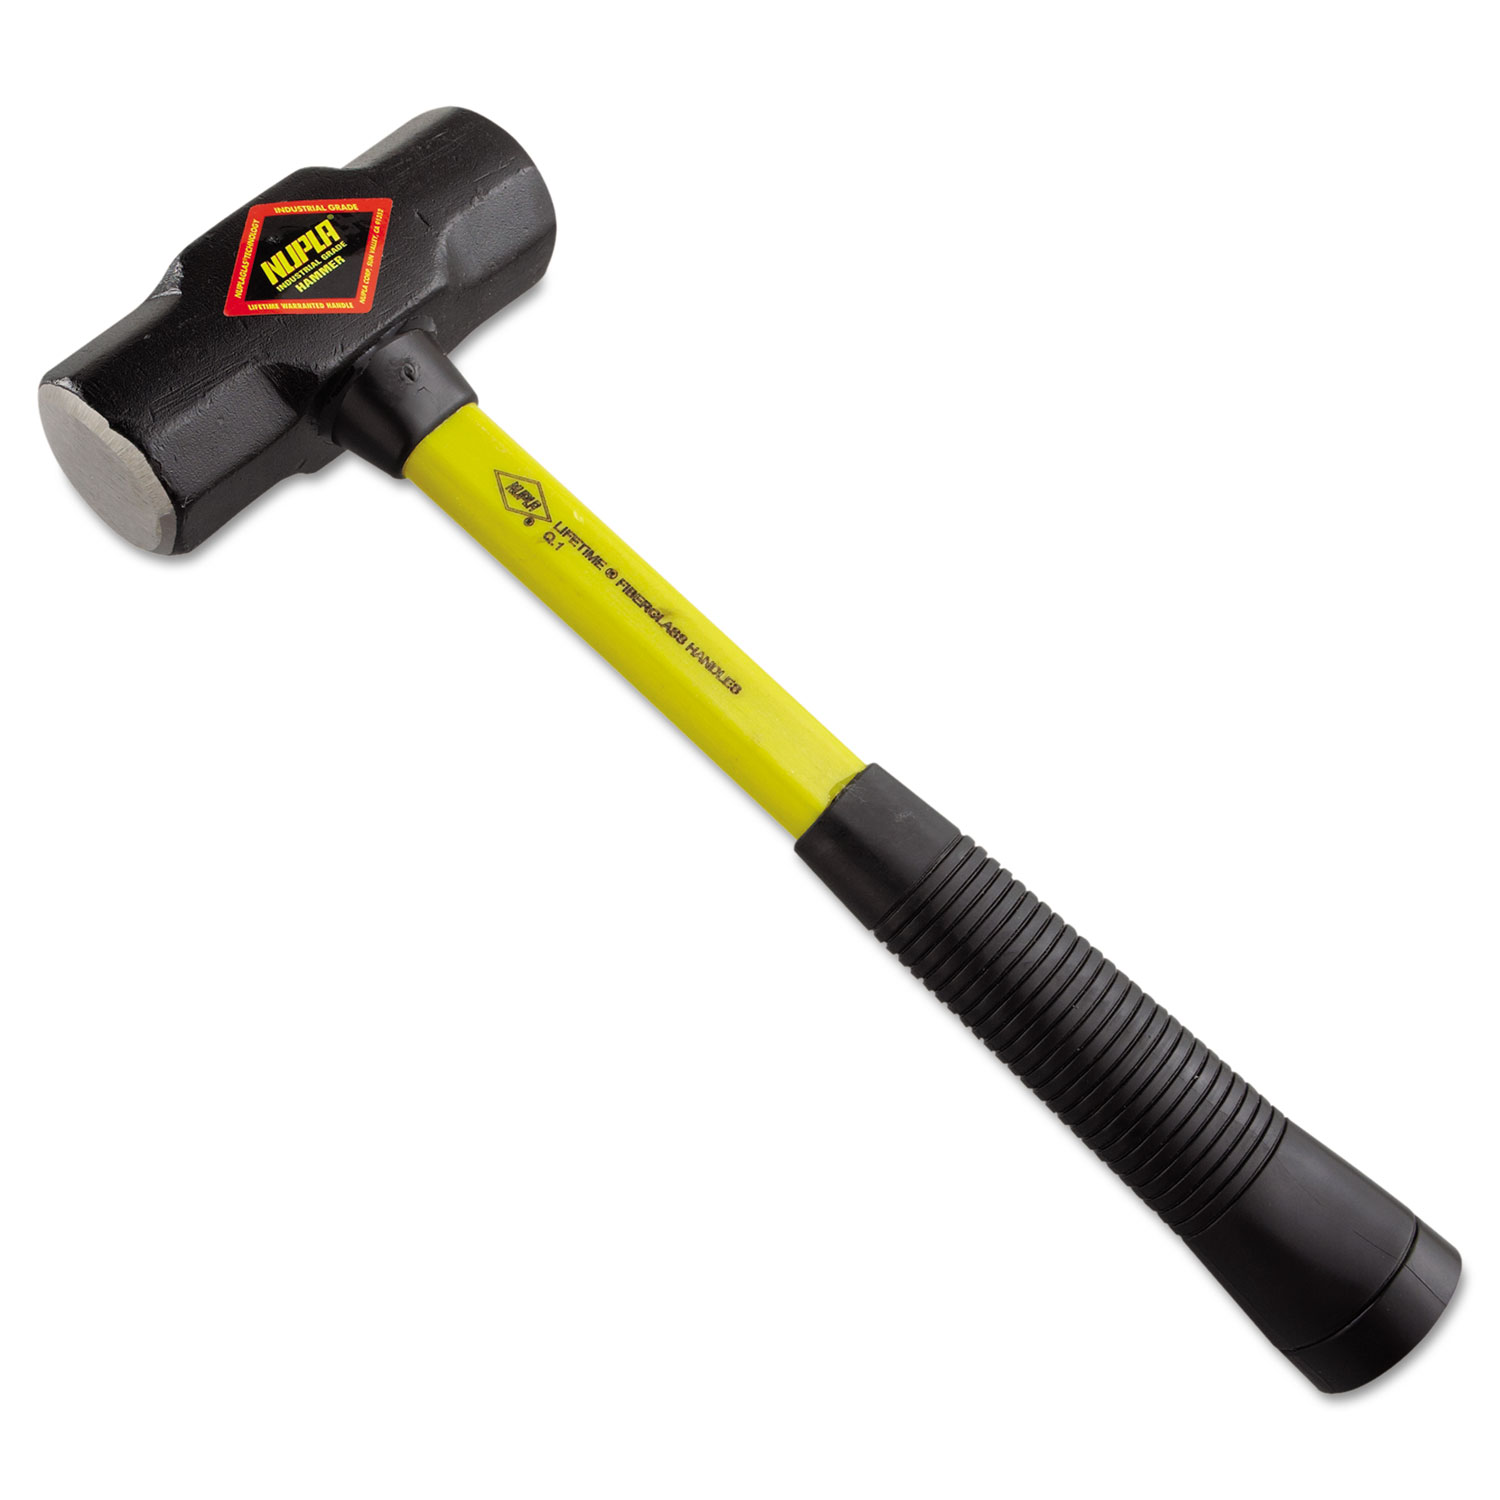 Steel-Head Sledge Hammer, 4lb, 17 Tool Length, CS Grip, Fiberglass Handle